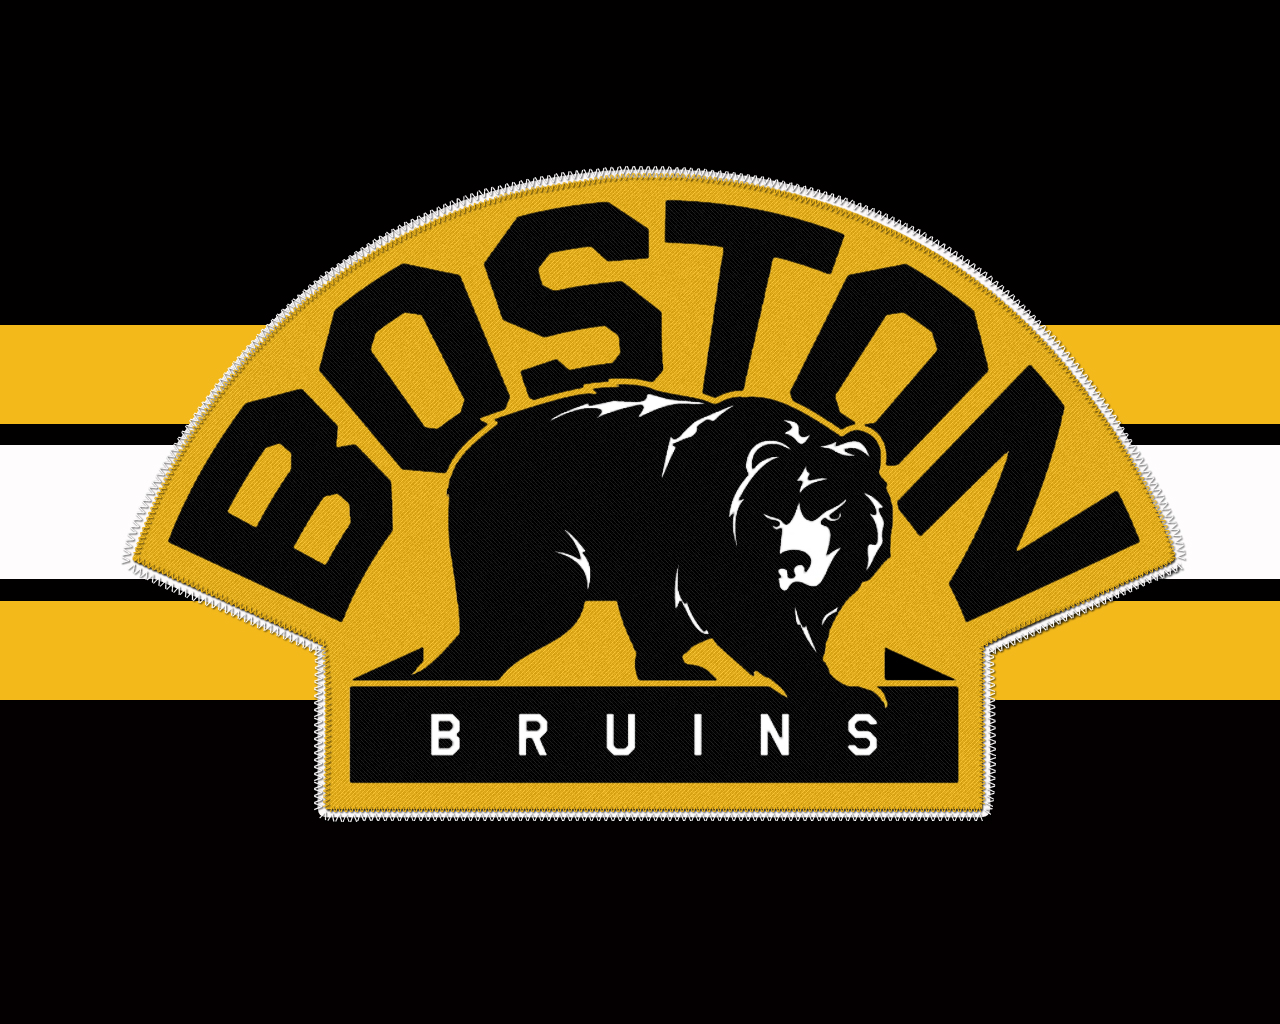 Free download boston bruins logo wallpaper 336x336 bruins here